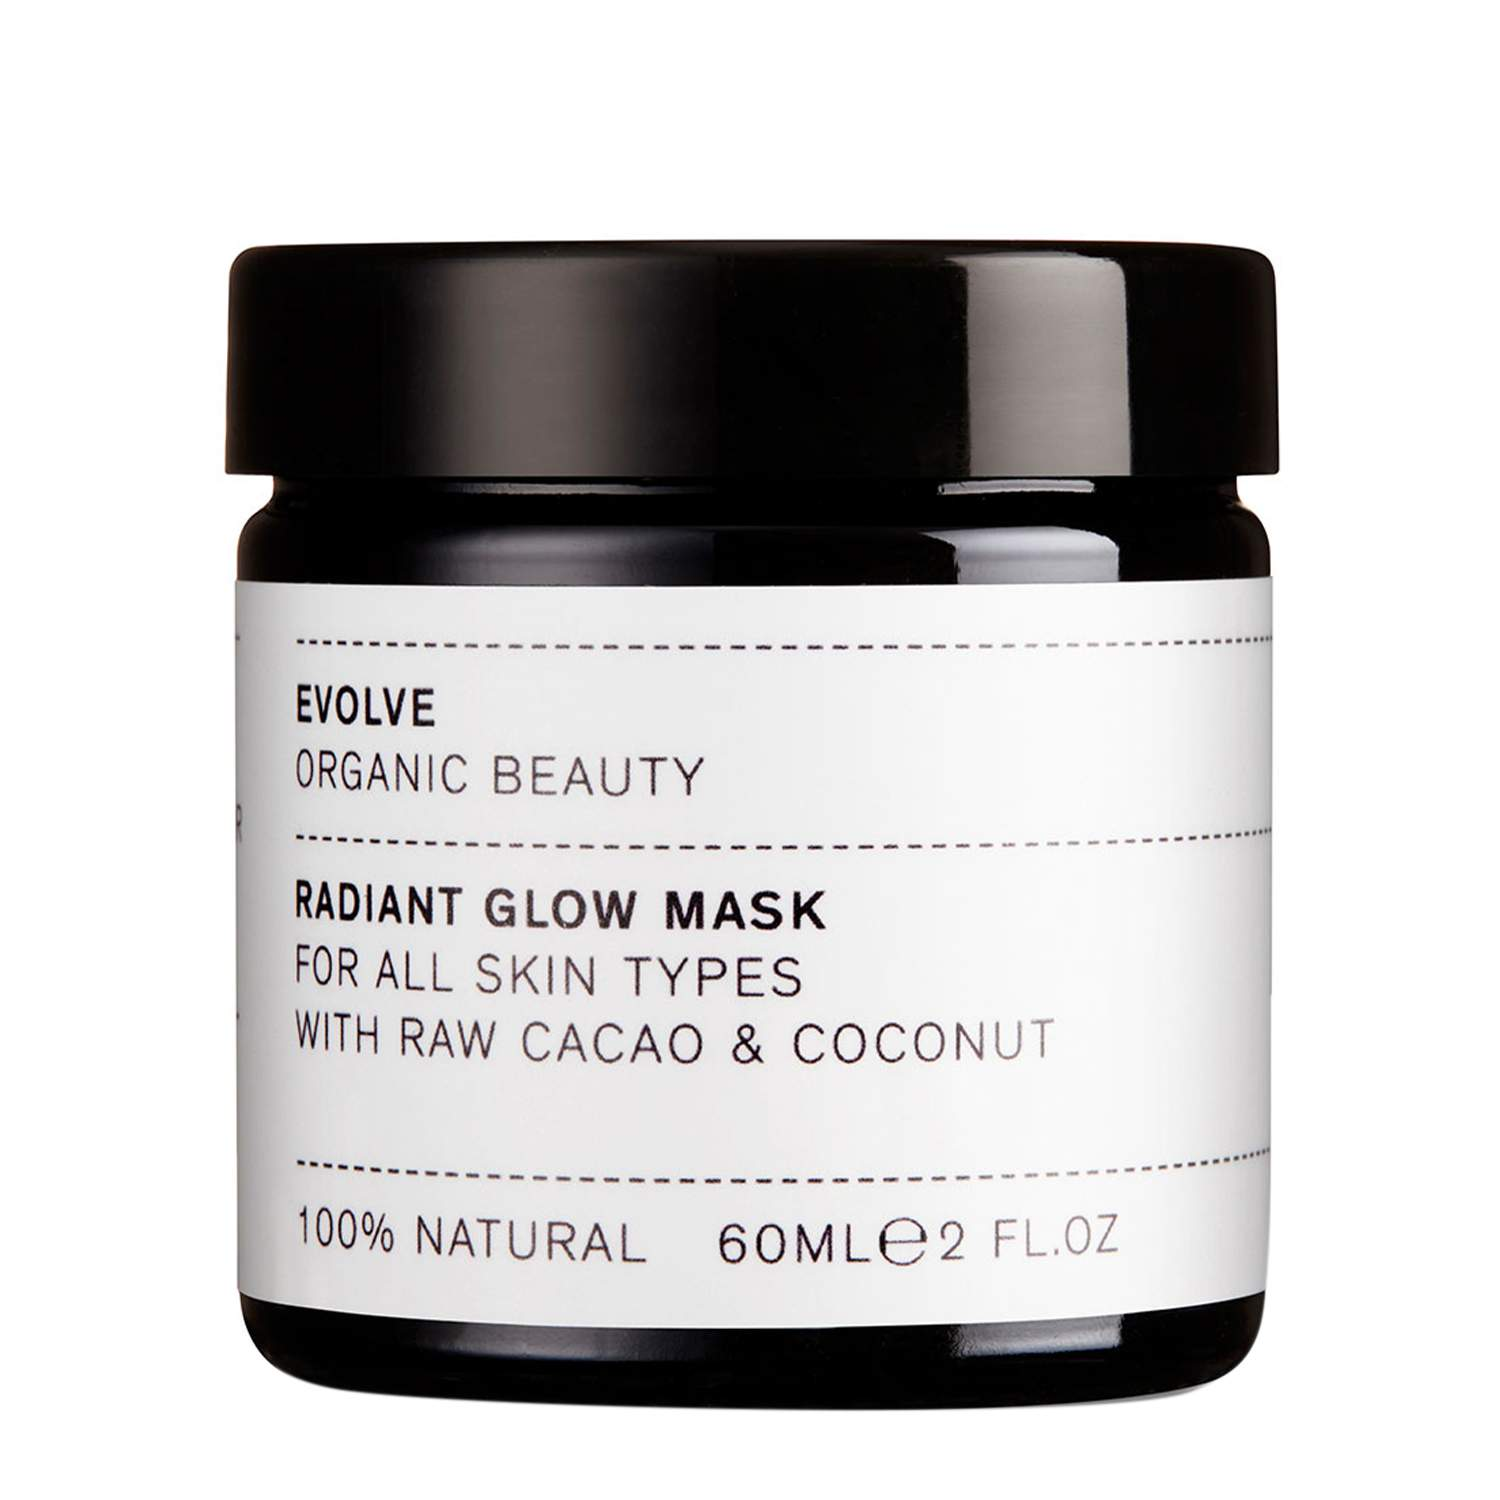 Evolve Organic Beauty Radiant Glow Mask